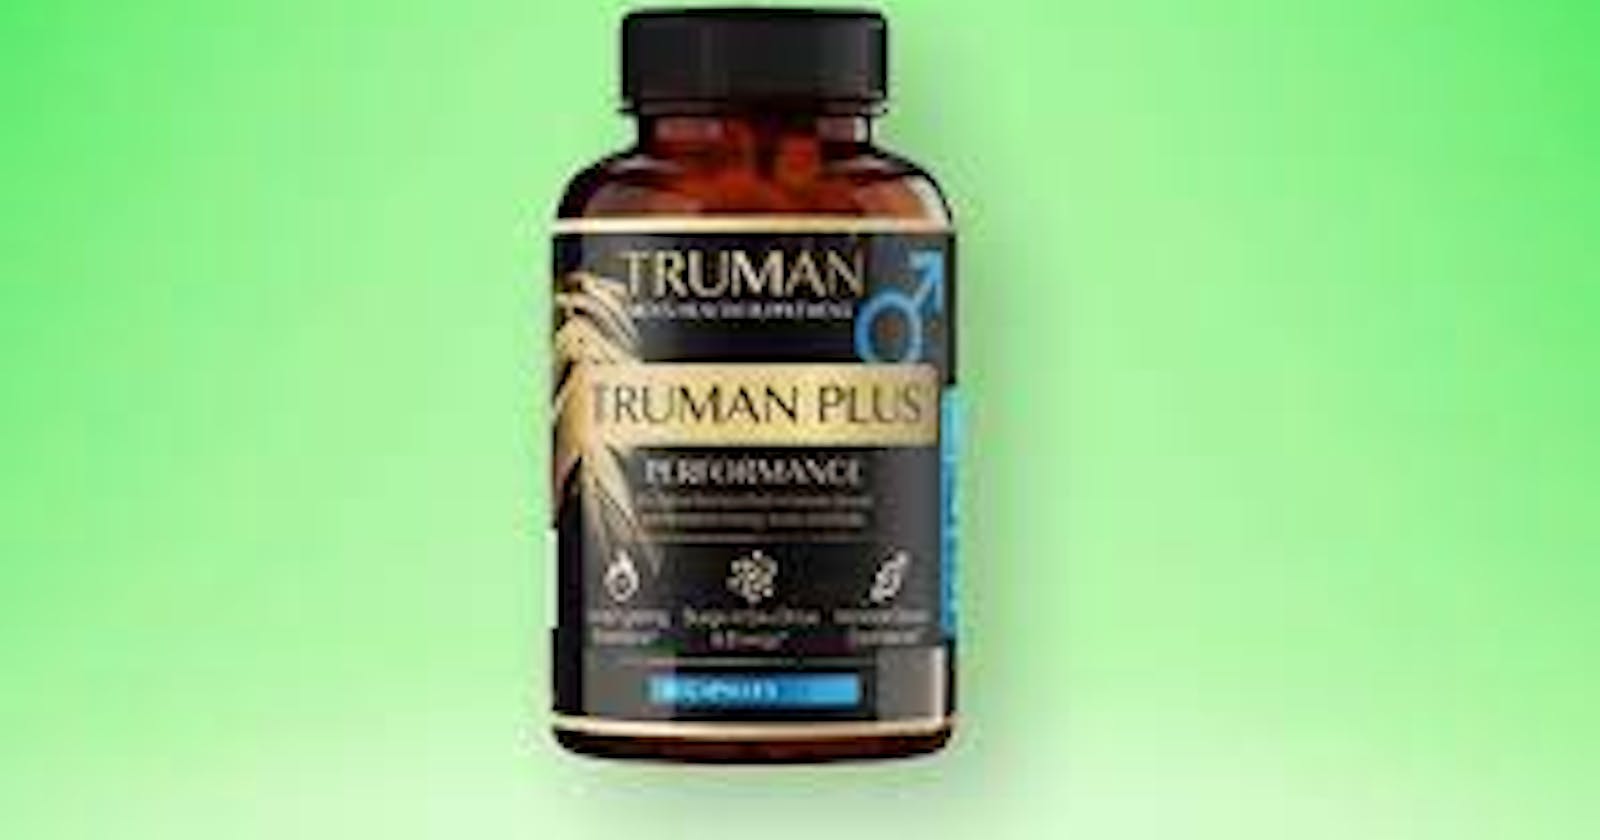 Truman Plus Men's Health Reviews